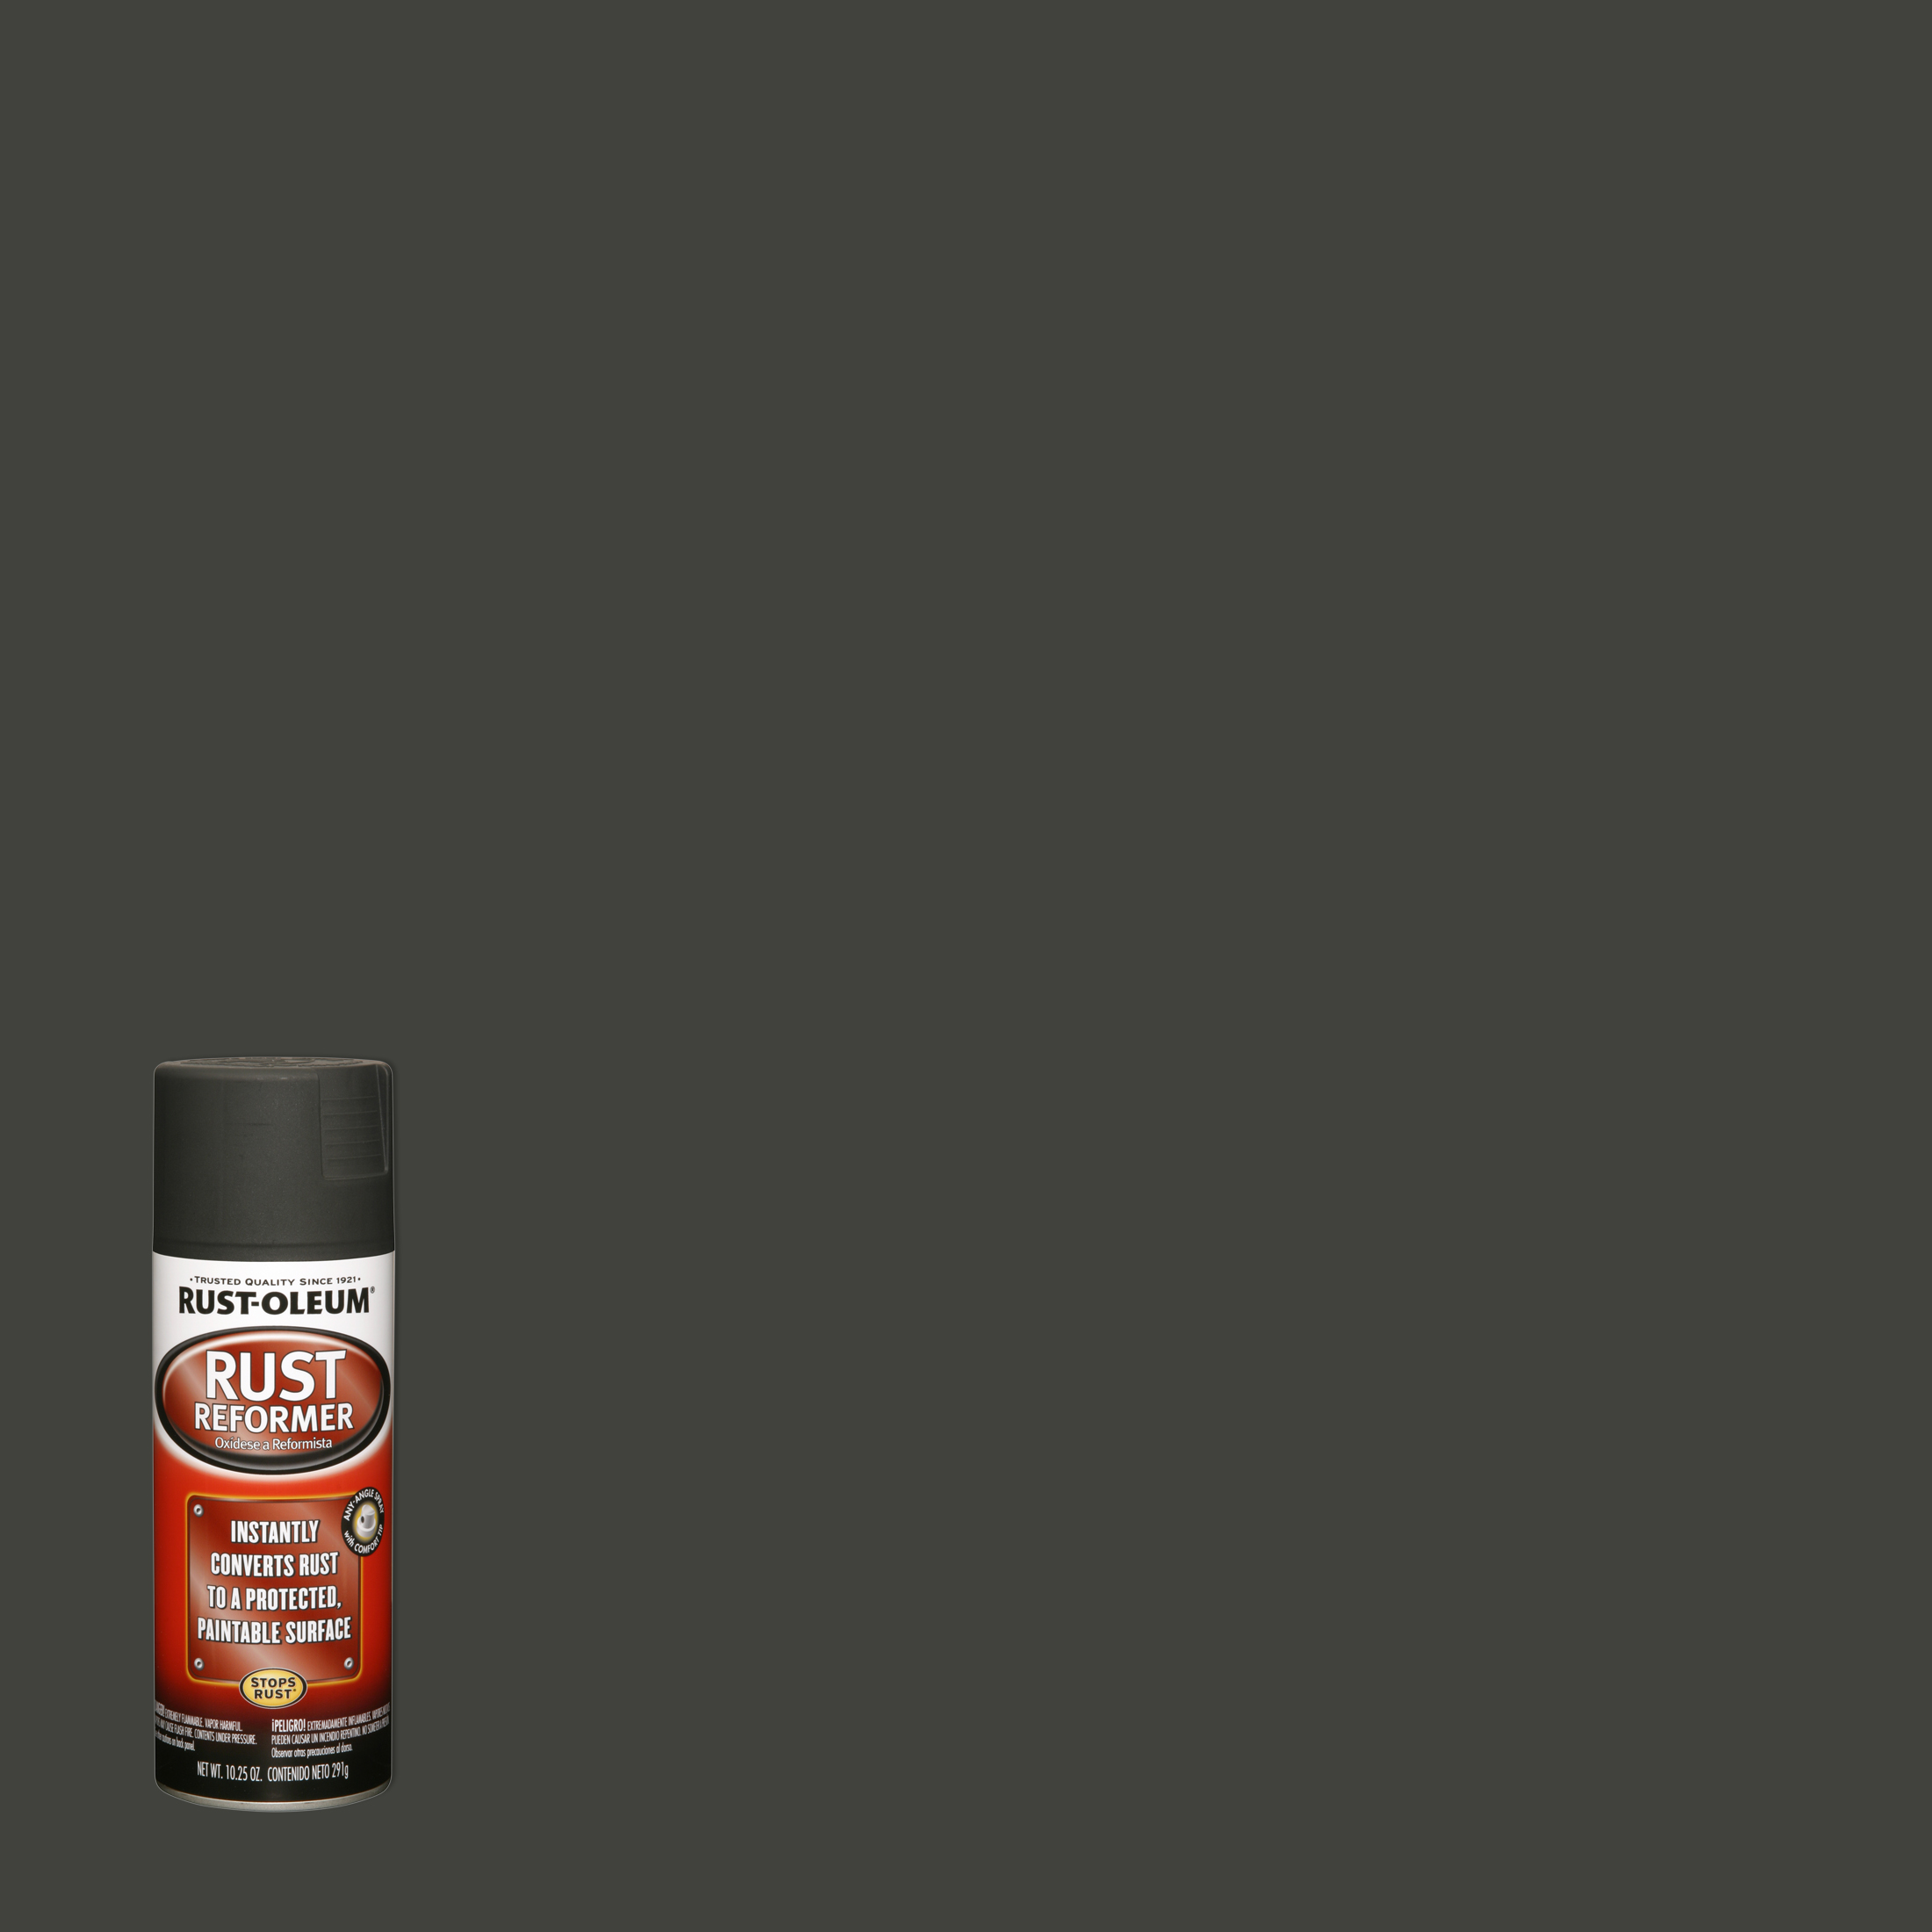 Black, Rust-Oleum Automotive Rust Reformer Flat Spray Paint-248658, 10.25 oz - image 1 of 9